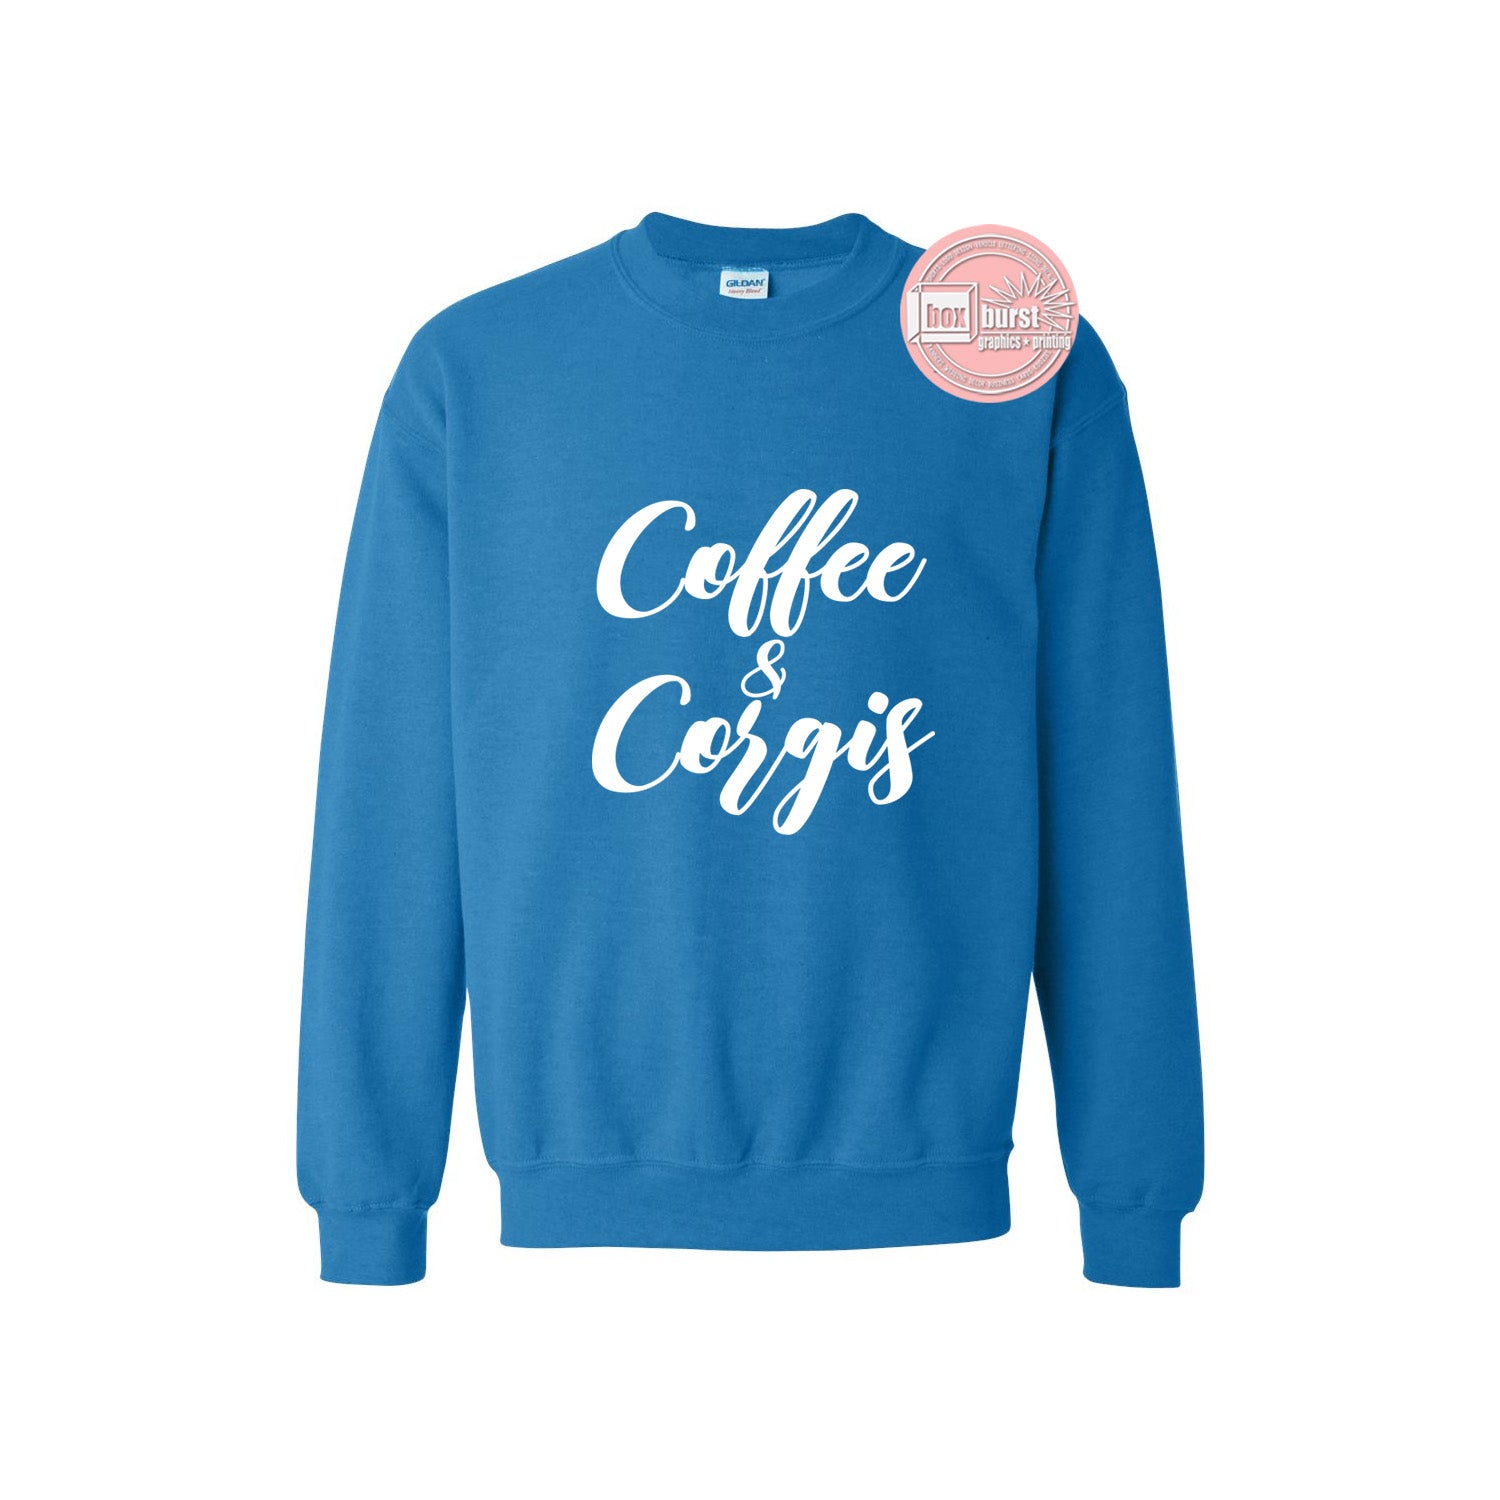 Coffee & Corgis unisex crew neck sweat shirt